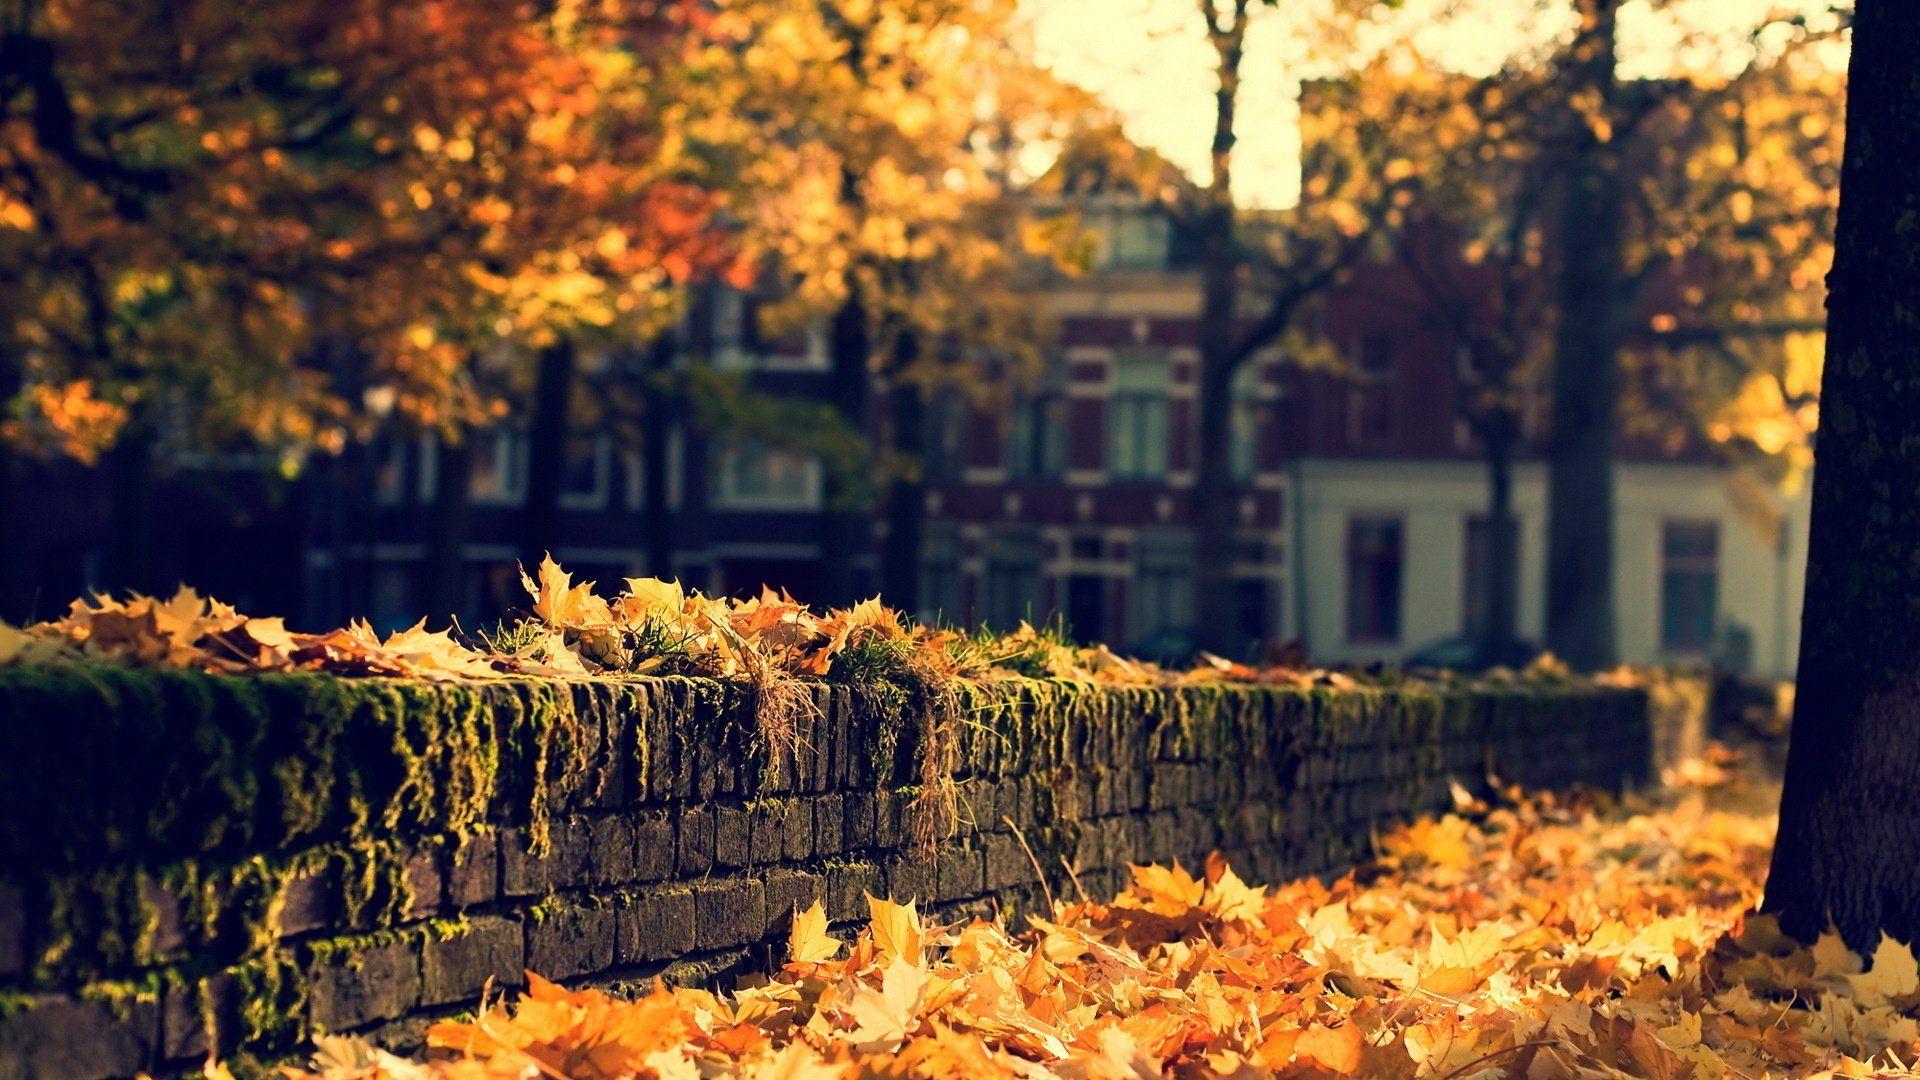 Autumn in the City Desktop Wallpaper at